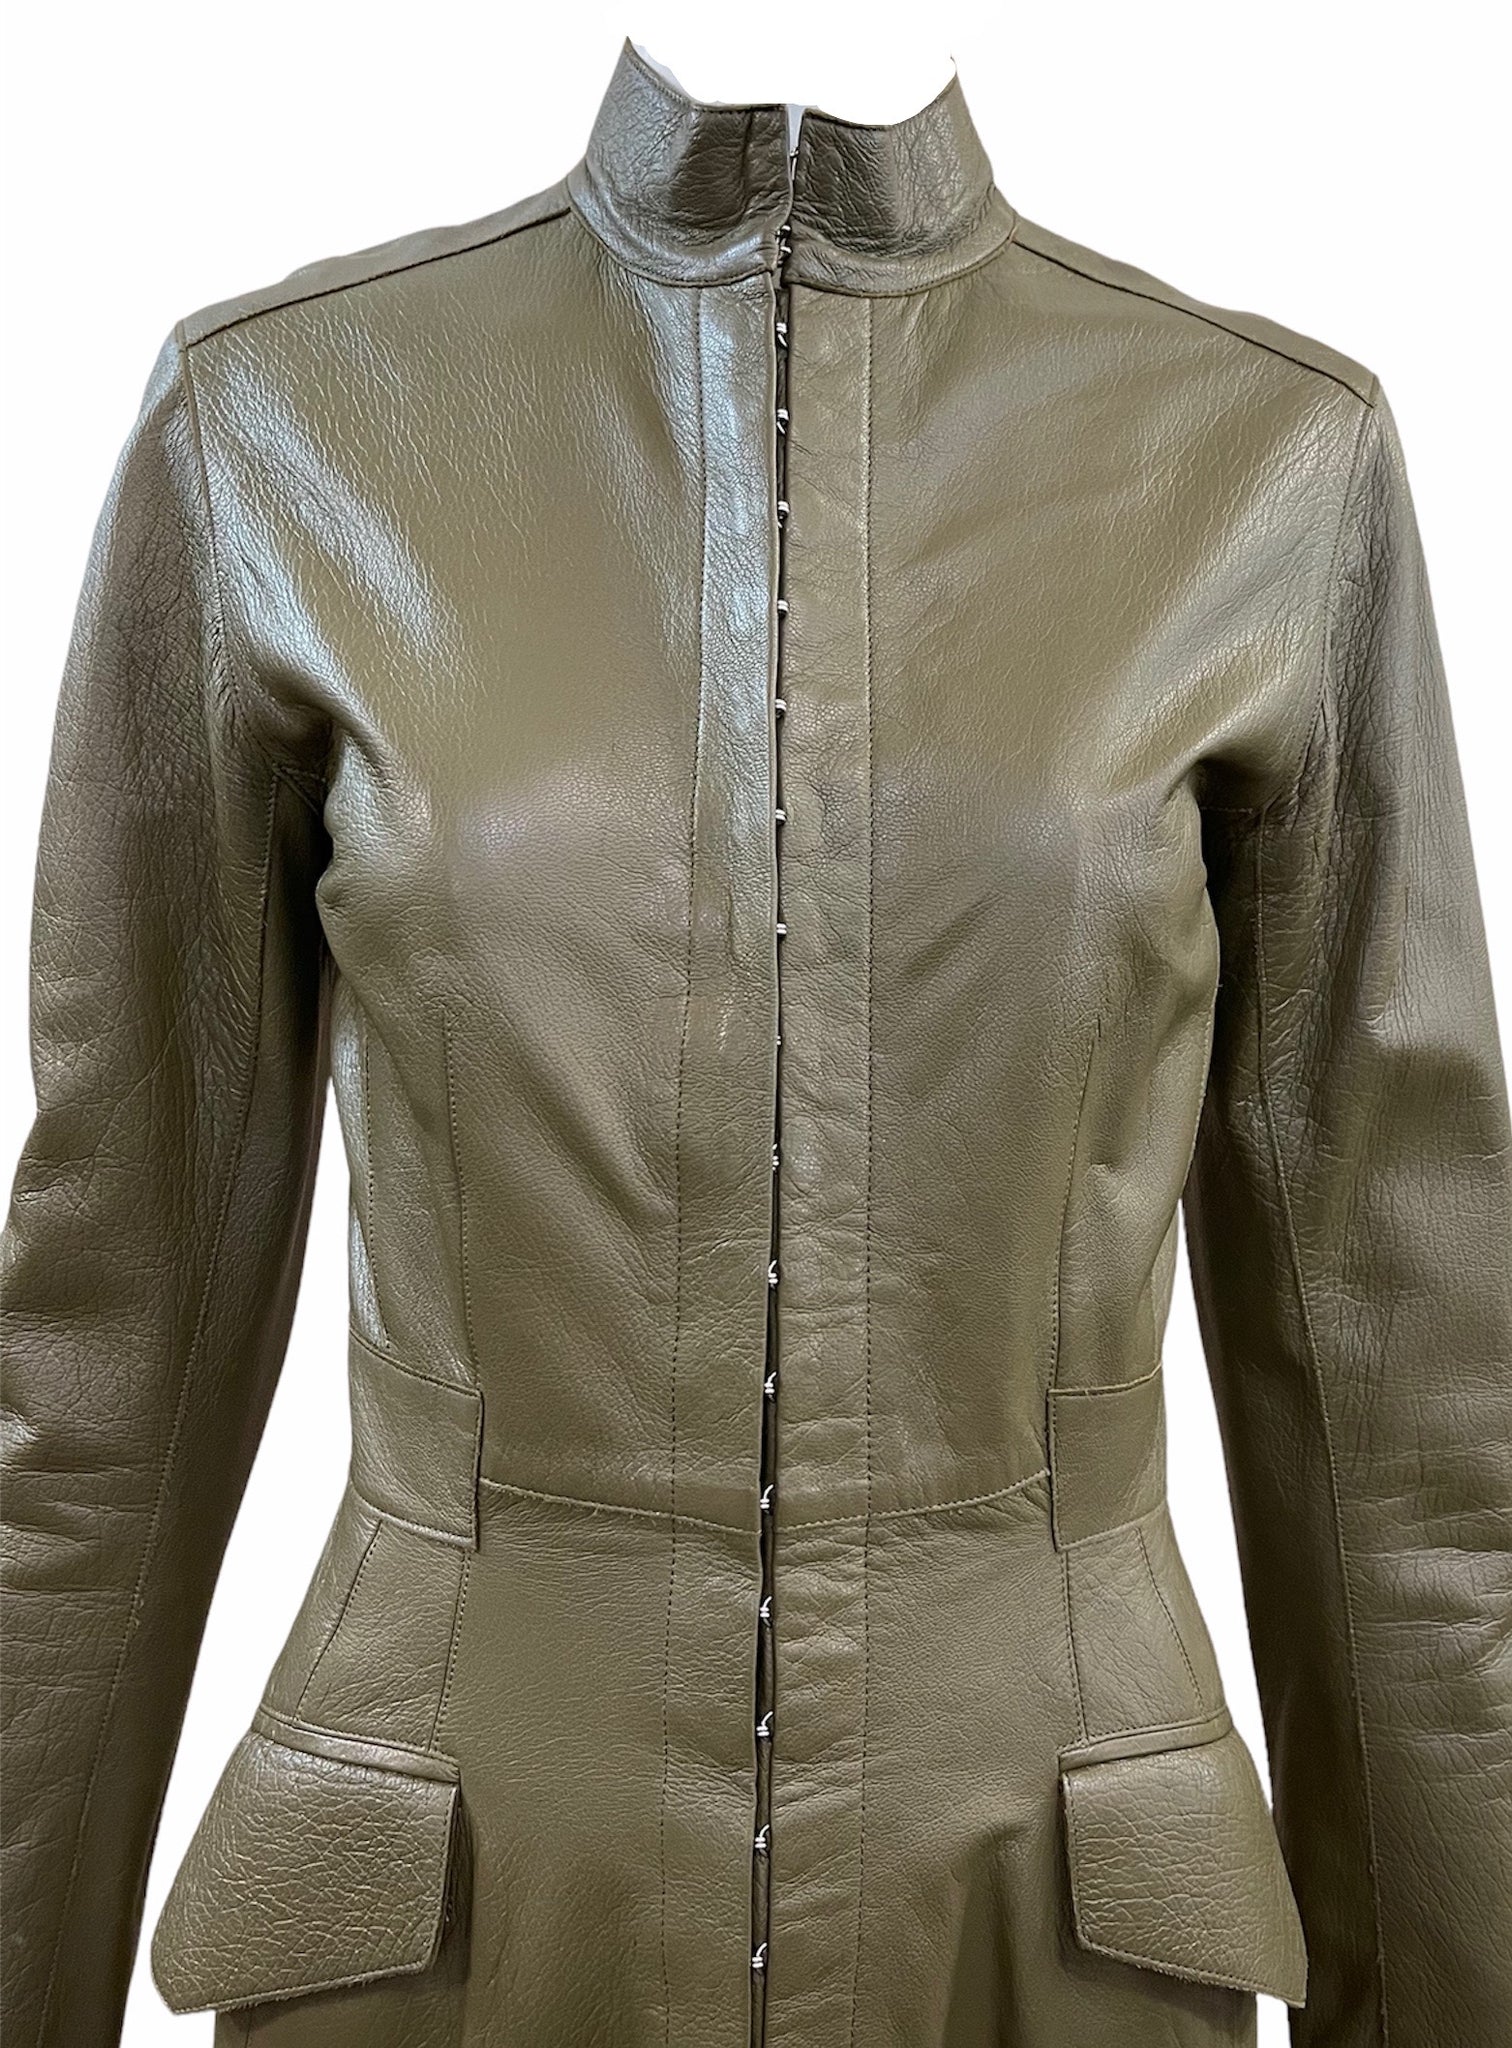 LOUIS VUITTON Coats & Jackets - Women - 7 products